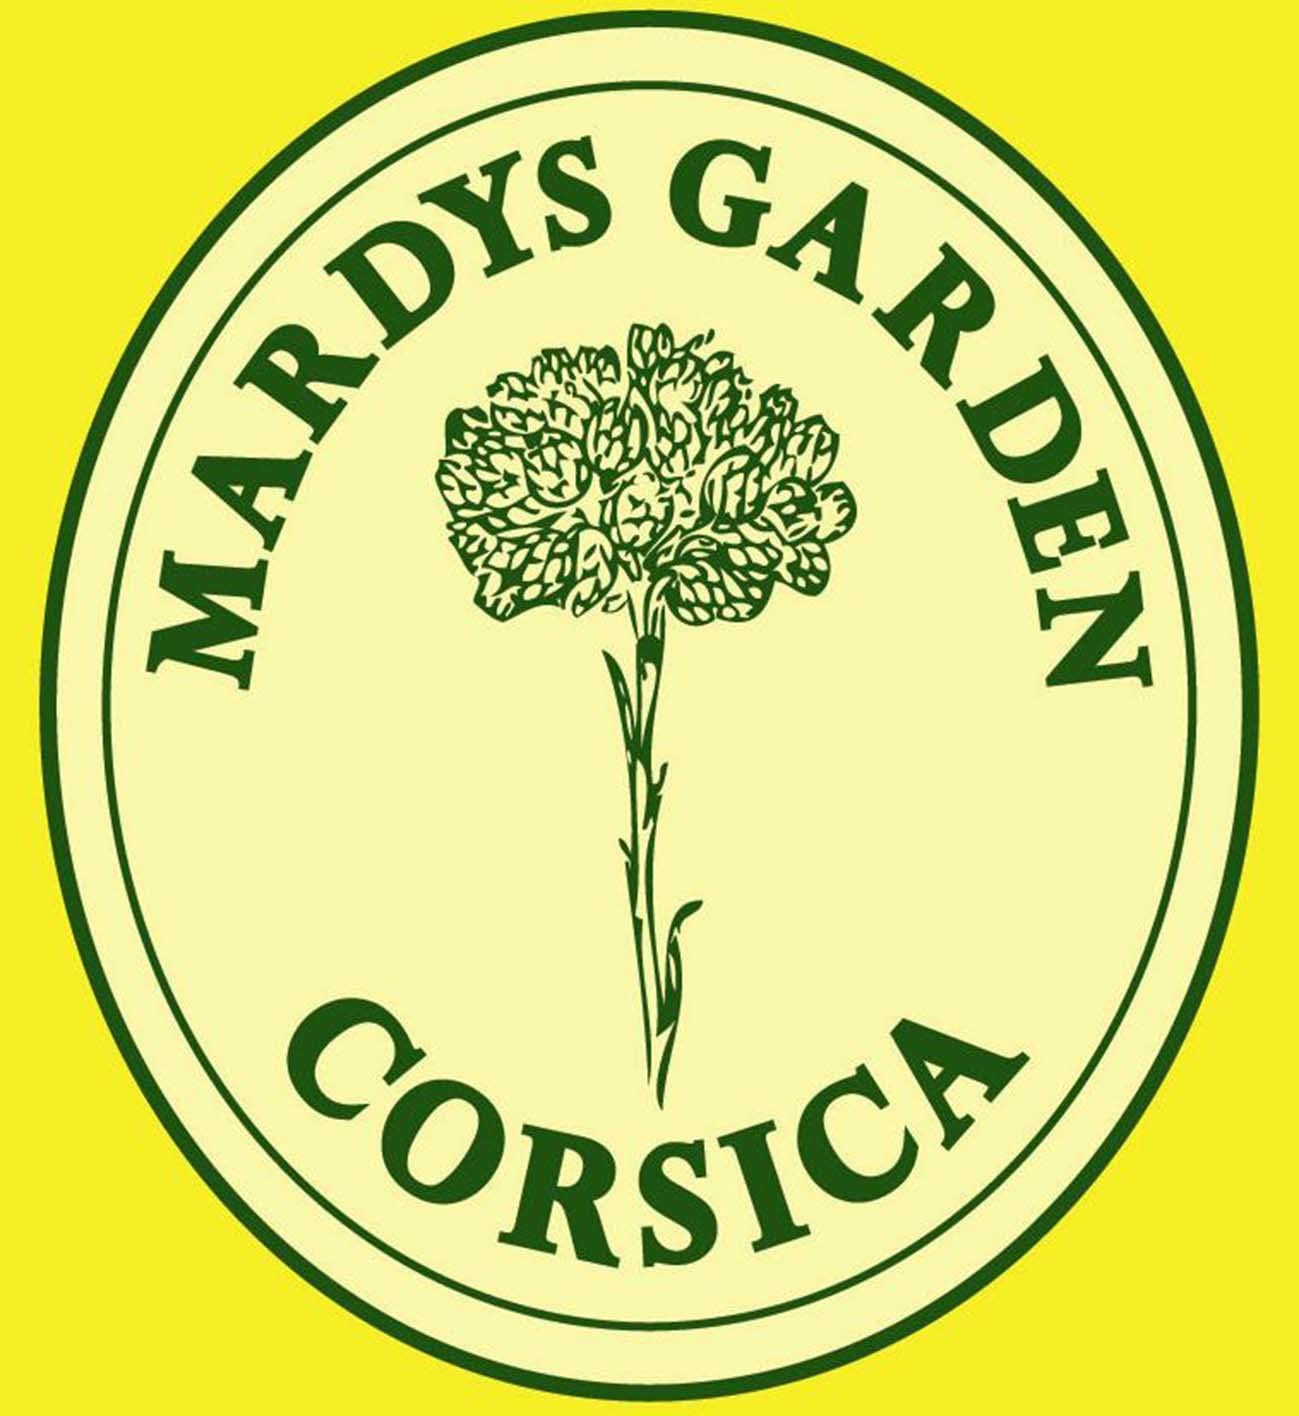 MARDYS GARDEN logo. Certified organic farmer since 2008 by Bureau Veritas. We produce organic Immortelle and Myrtle in Calvi, Corsica. We live ecologically on site